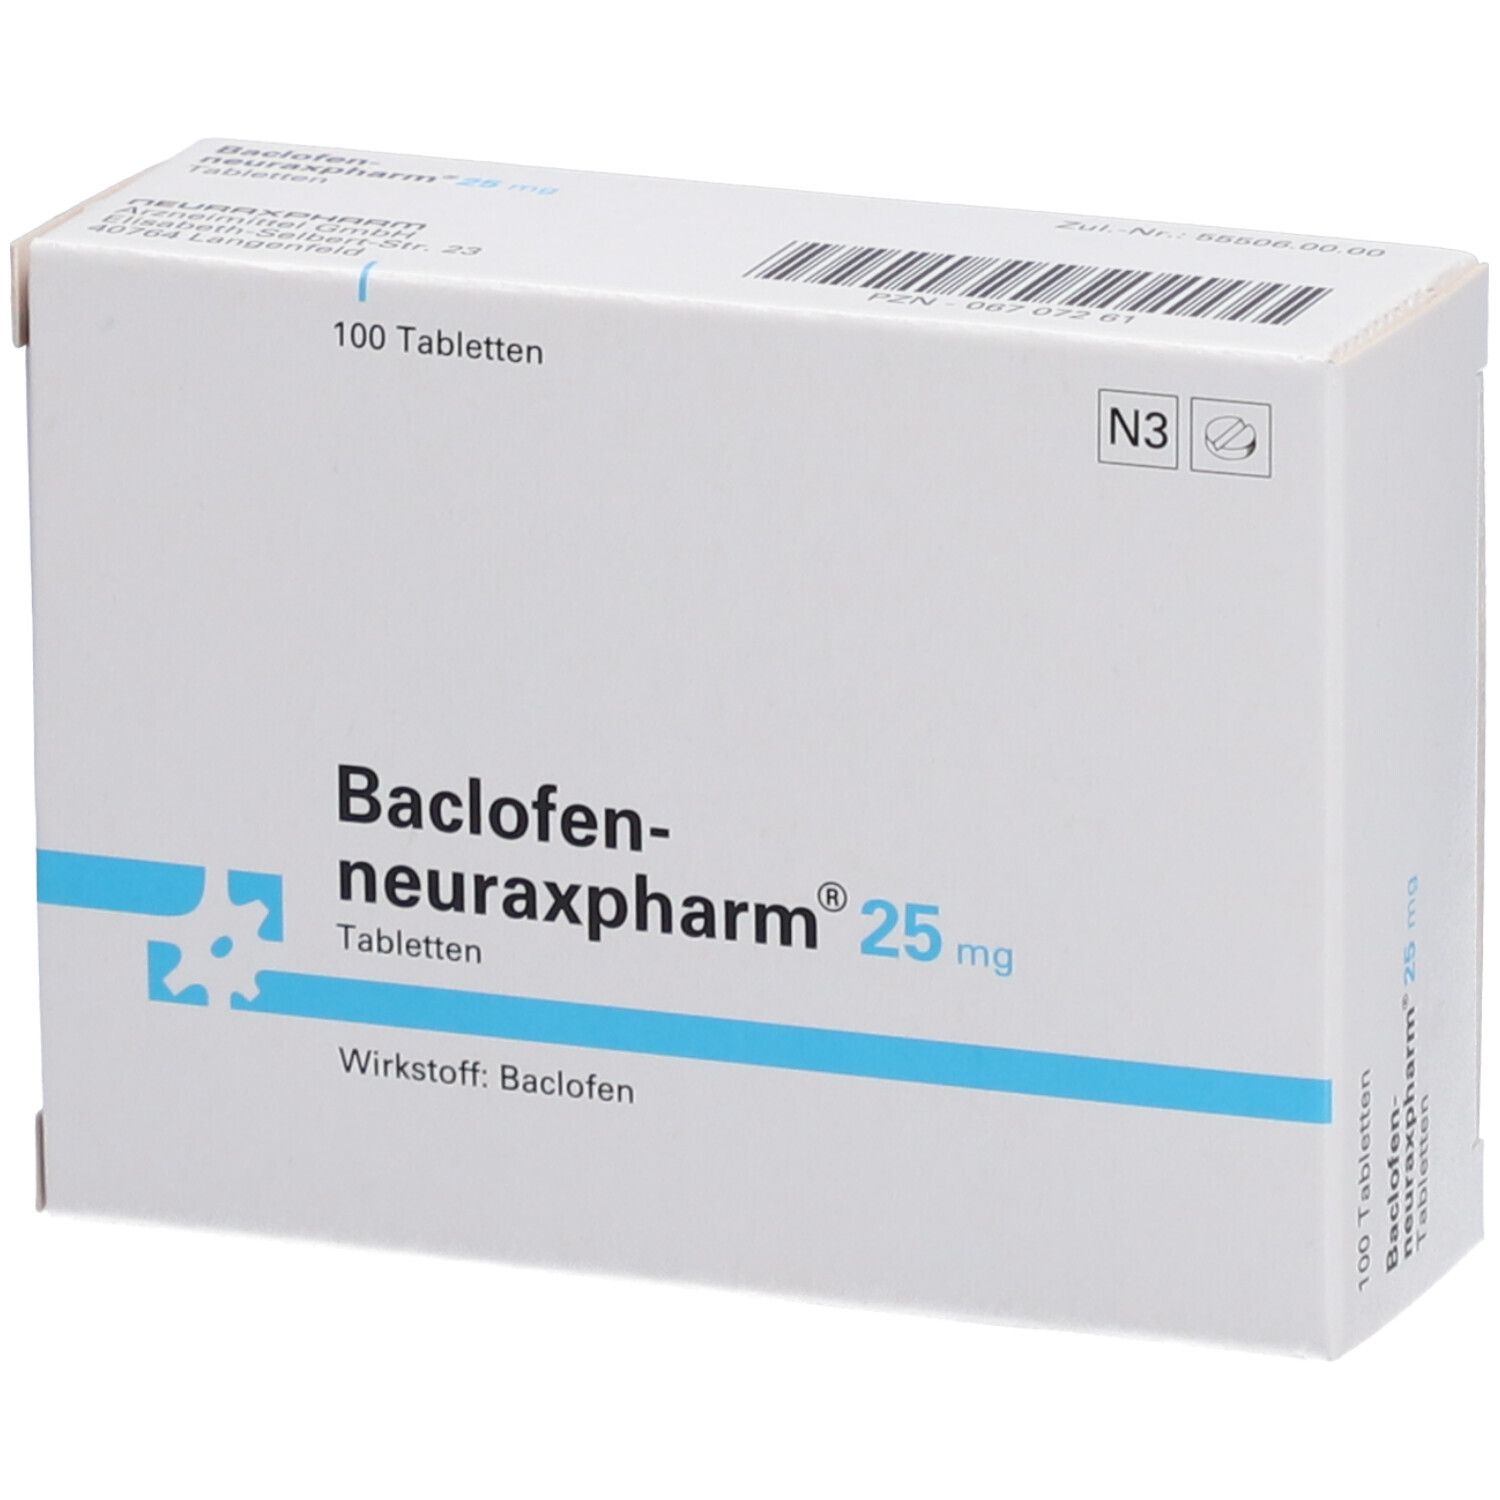 Baclofen-neuraxpharm® 25 mg